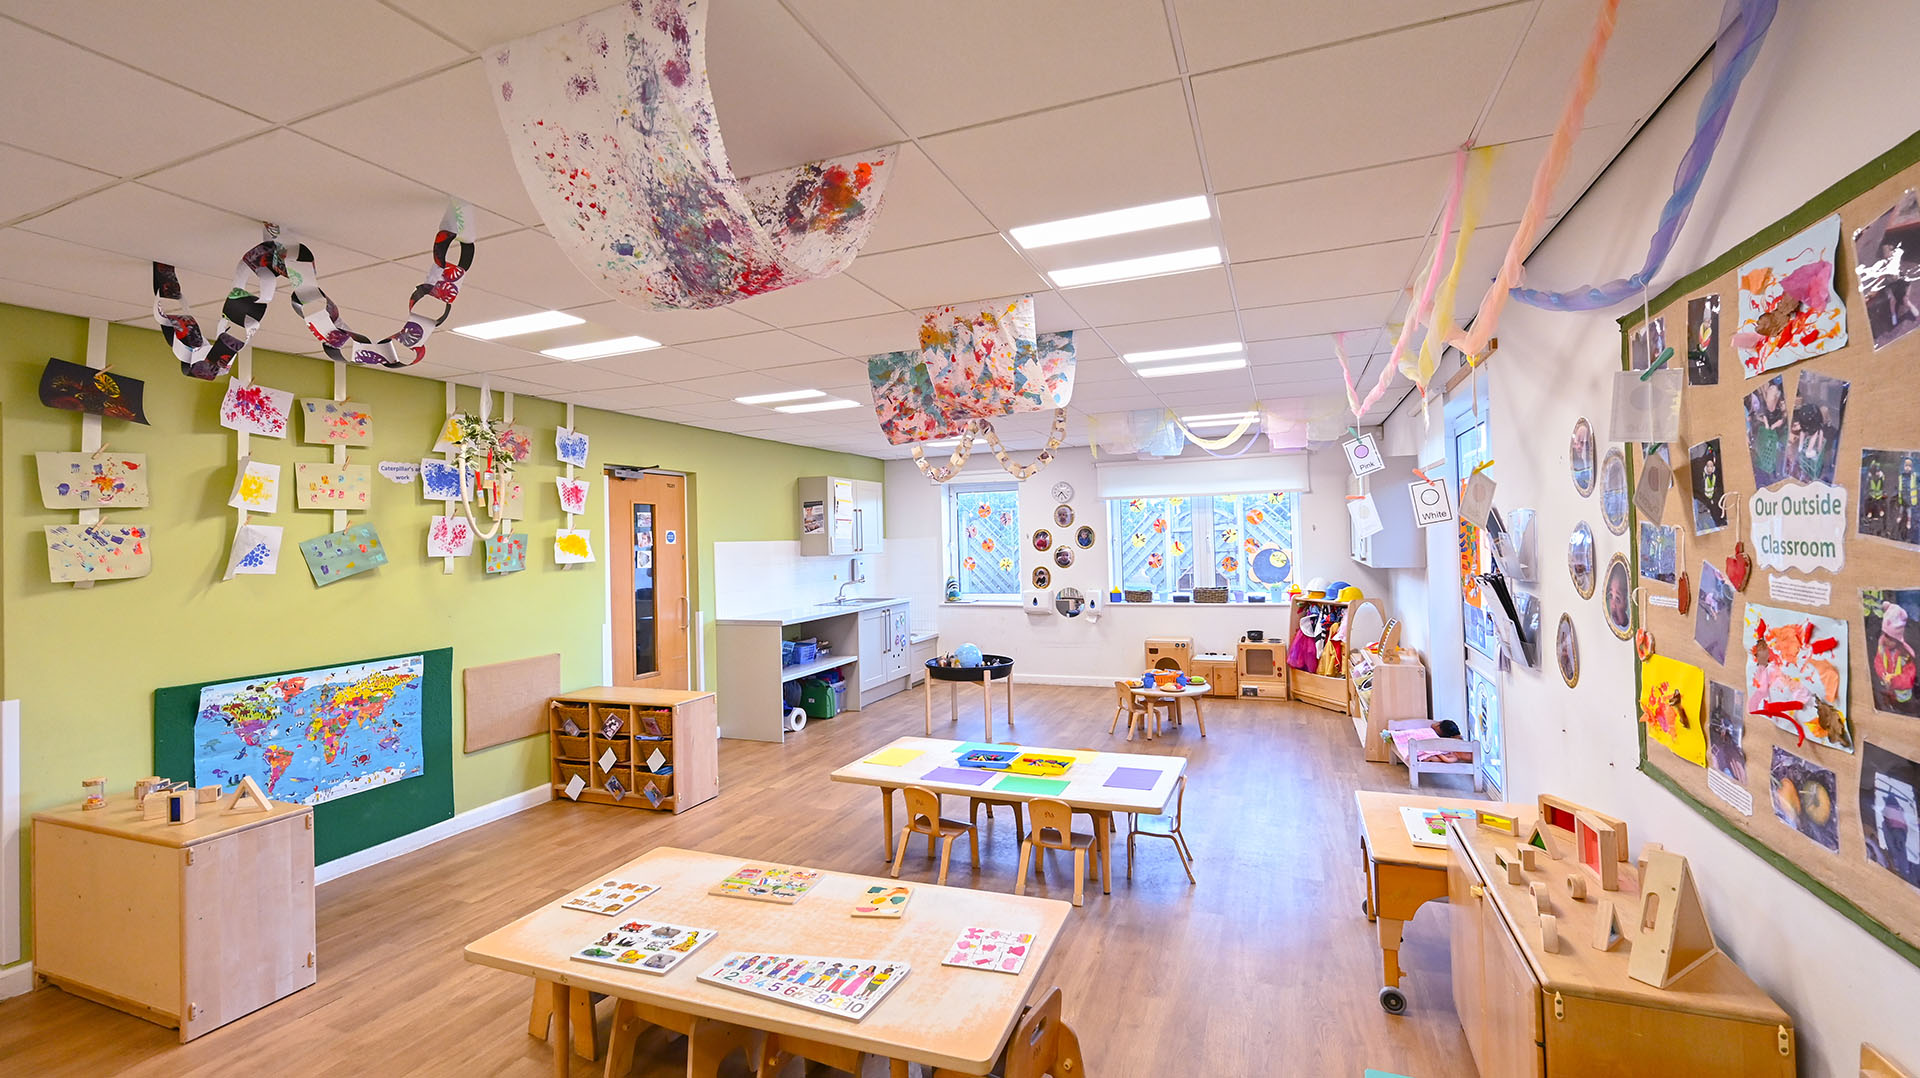 Talbot Woods Day Nursery and Preschool - Toddler Room 2